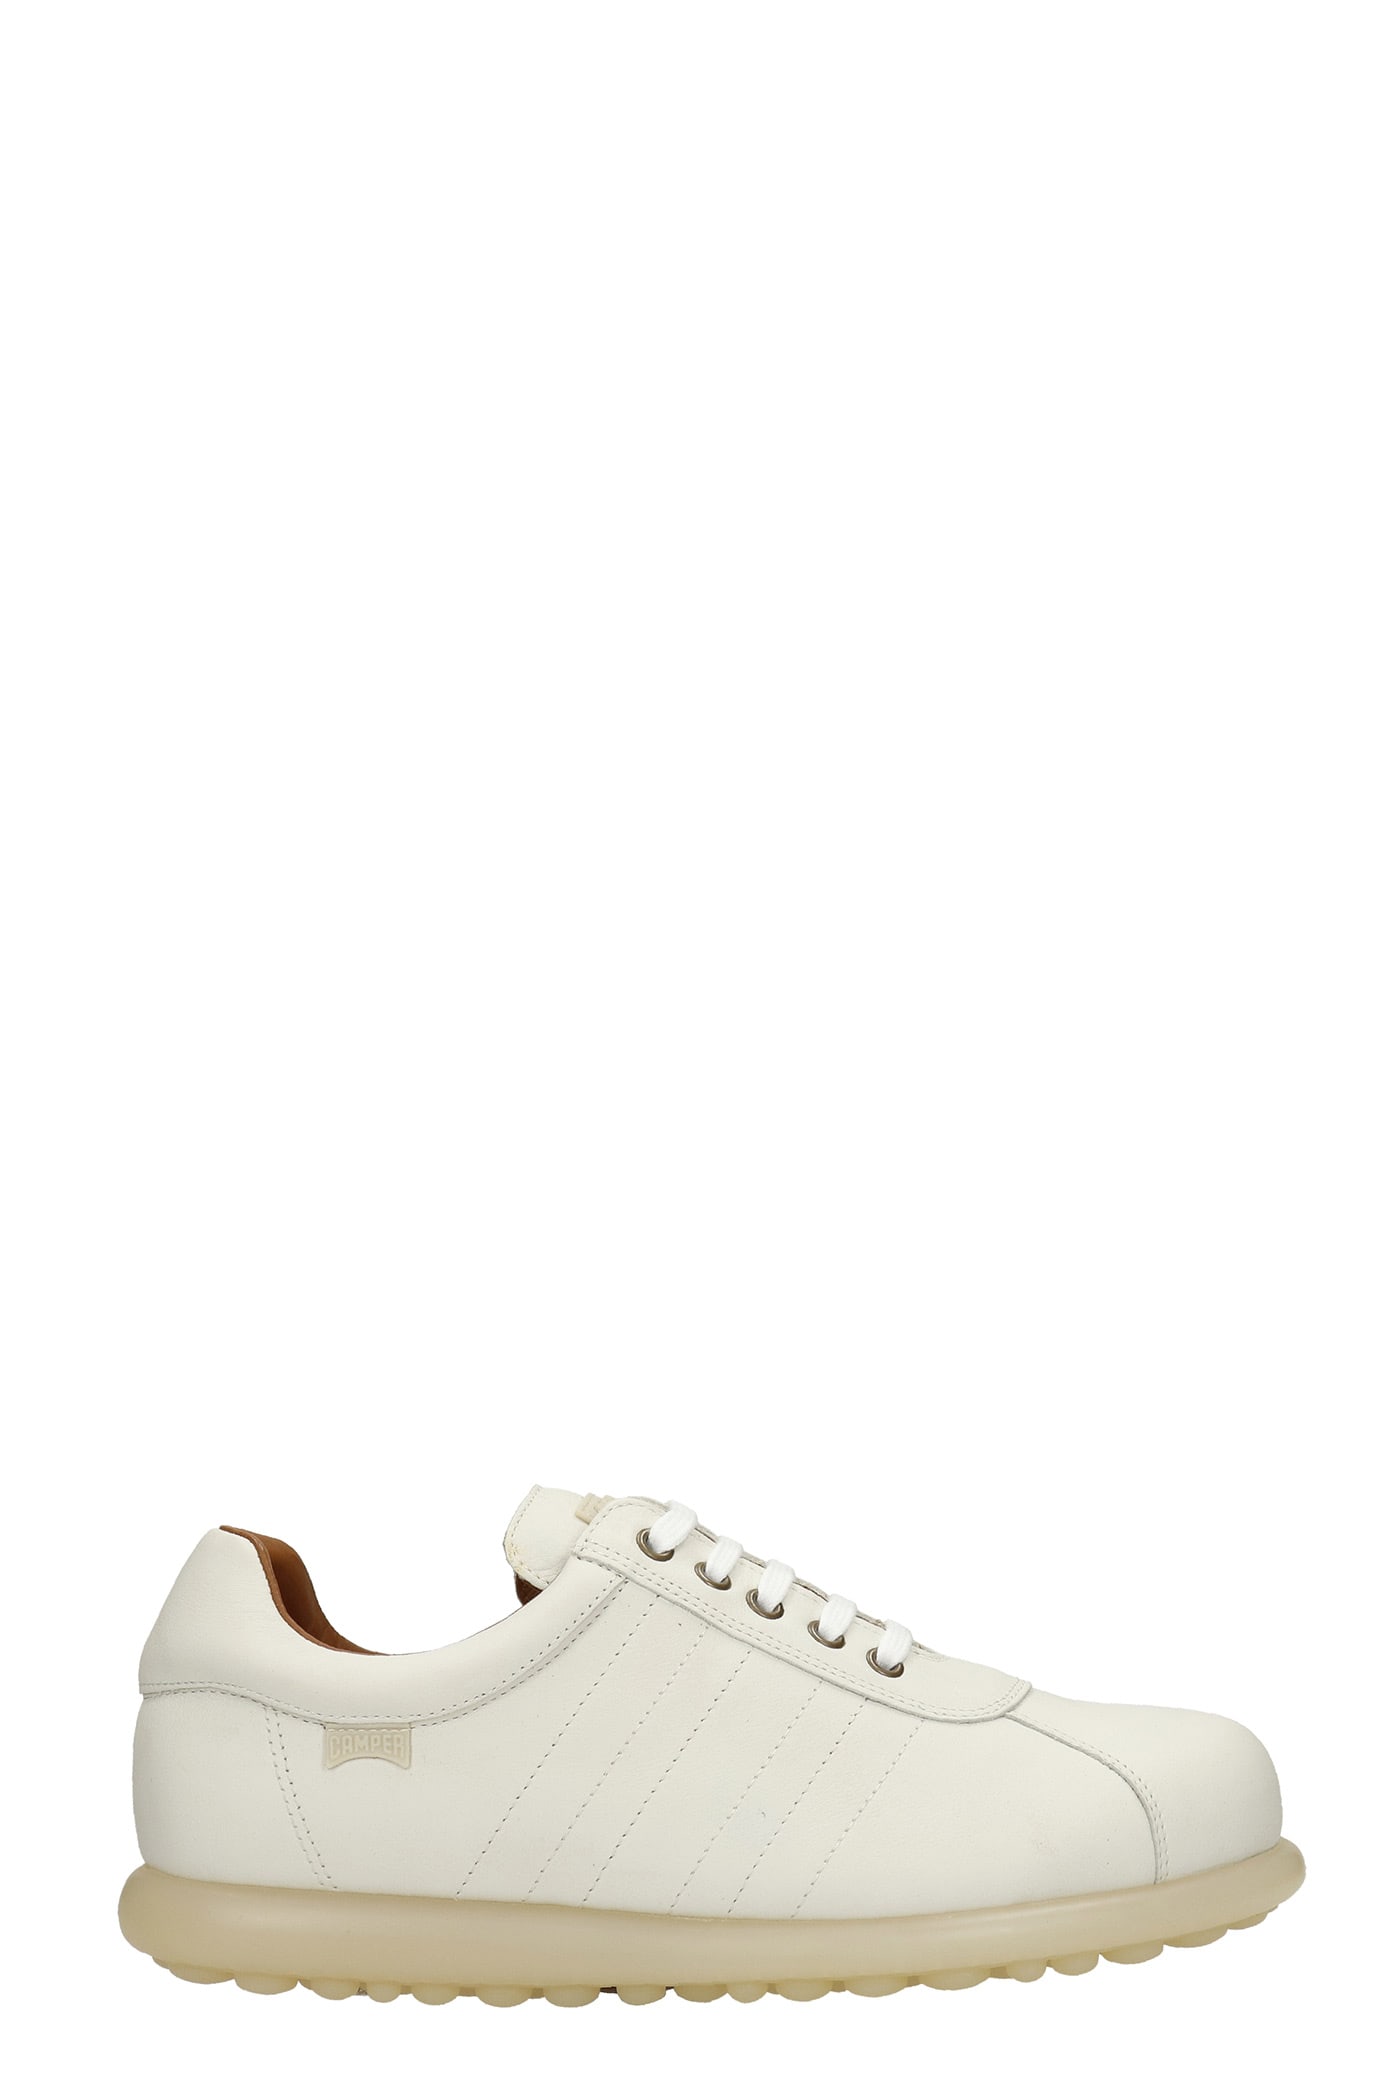 Camper Pelotas Ariel Sneakers In White Leather